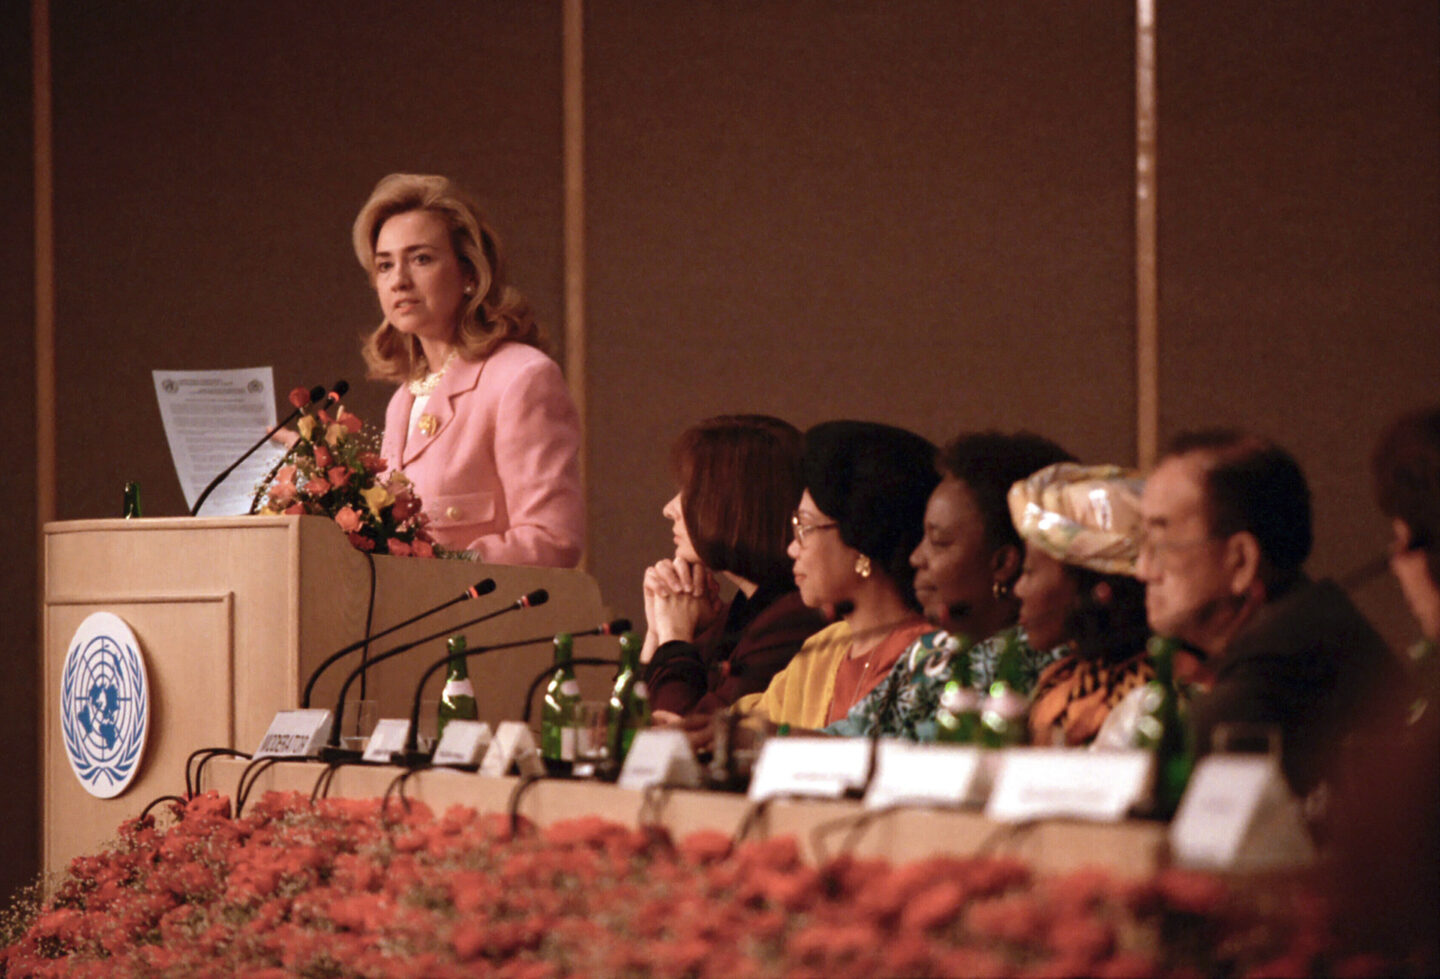 Hillary Clinton speaks behind a podium